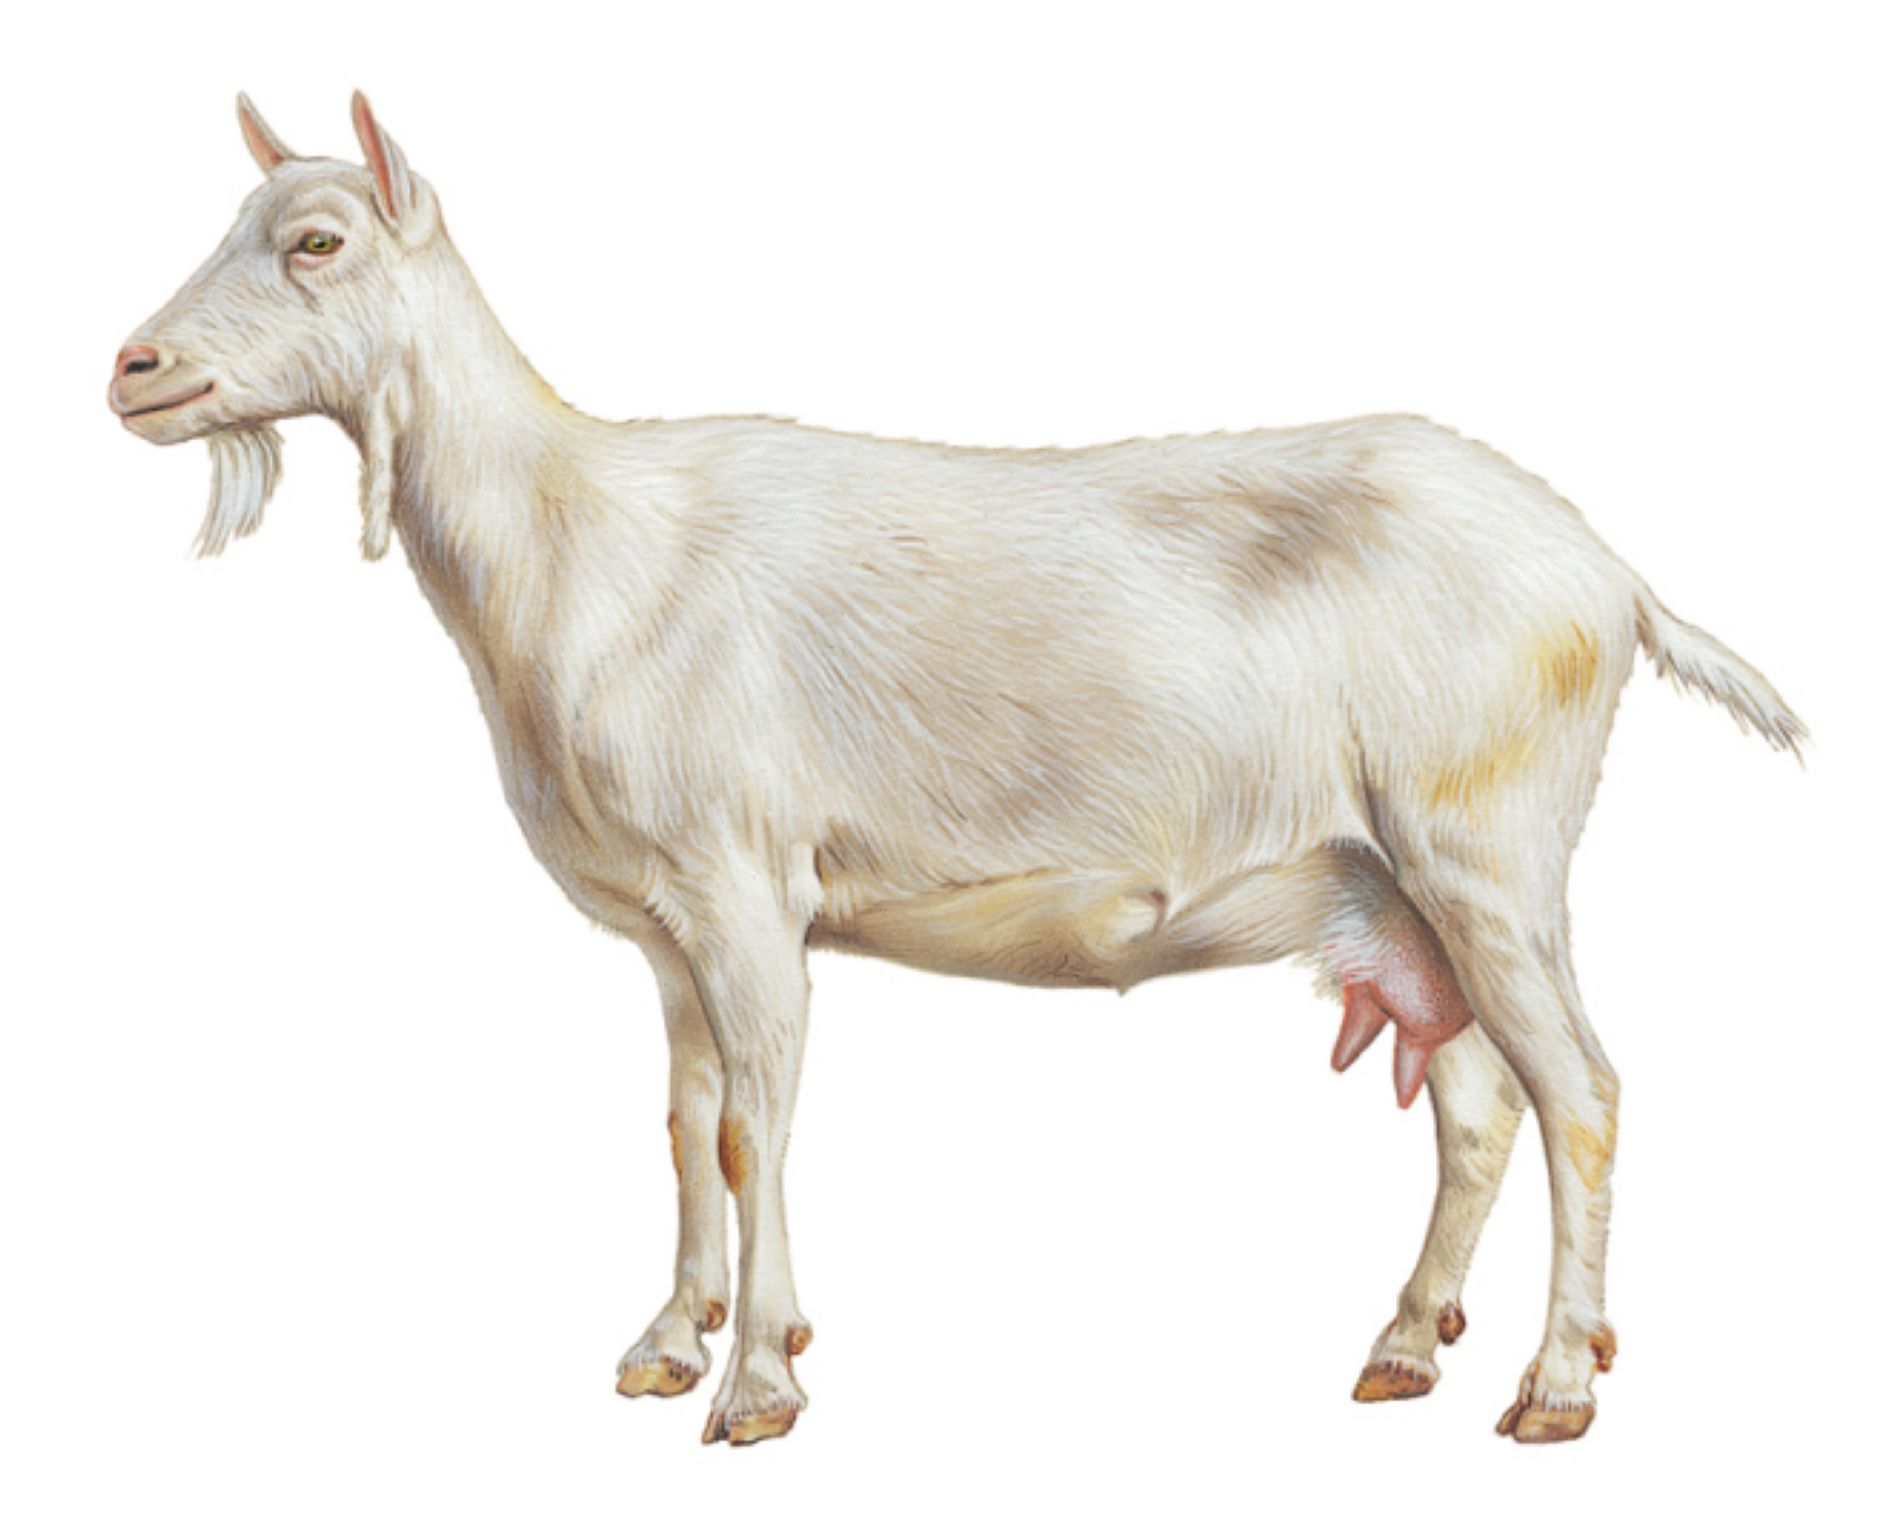 une chèvre de race saanen (originaire de Suisse)